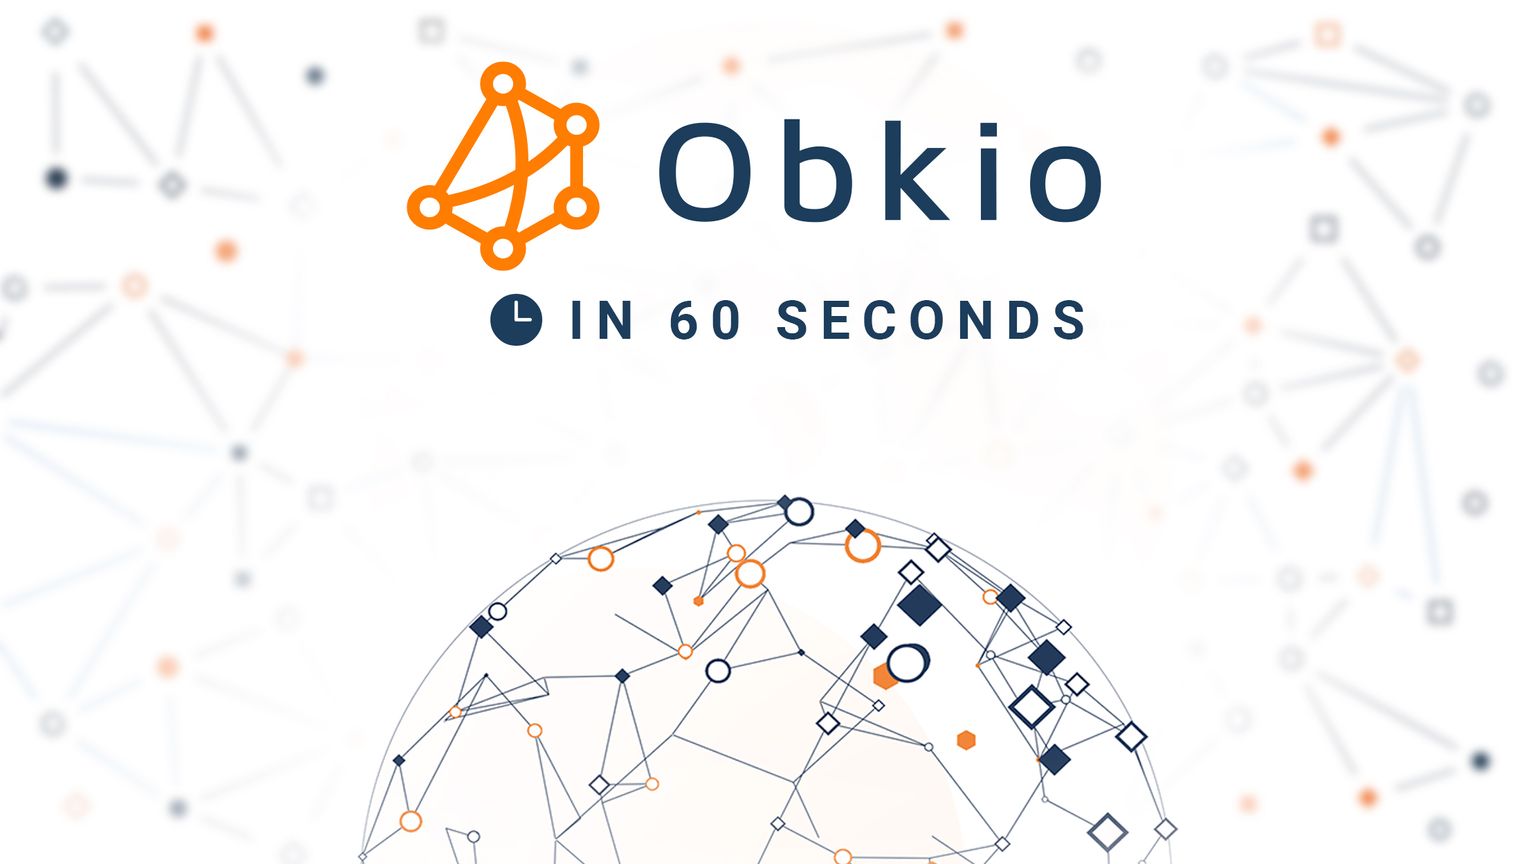 Obkio in 60 seconds